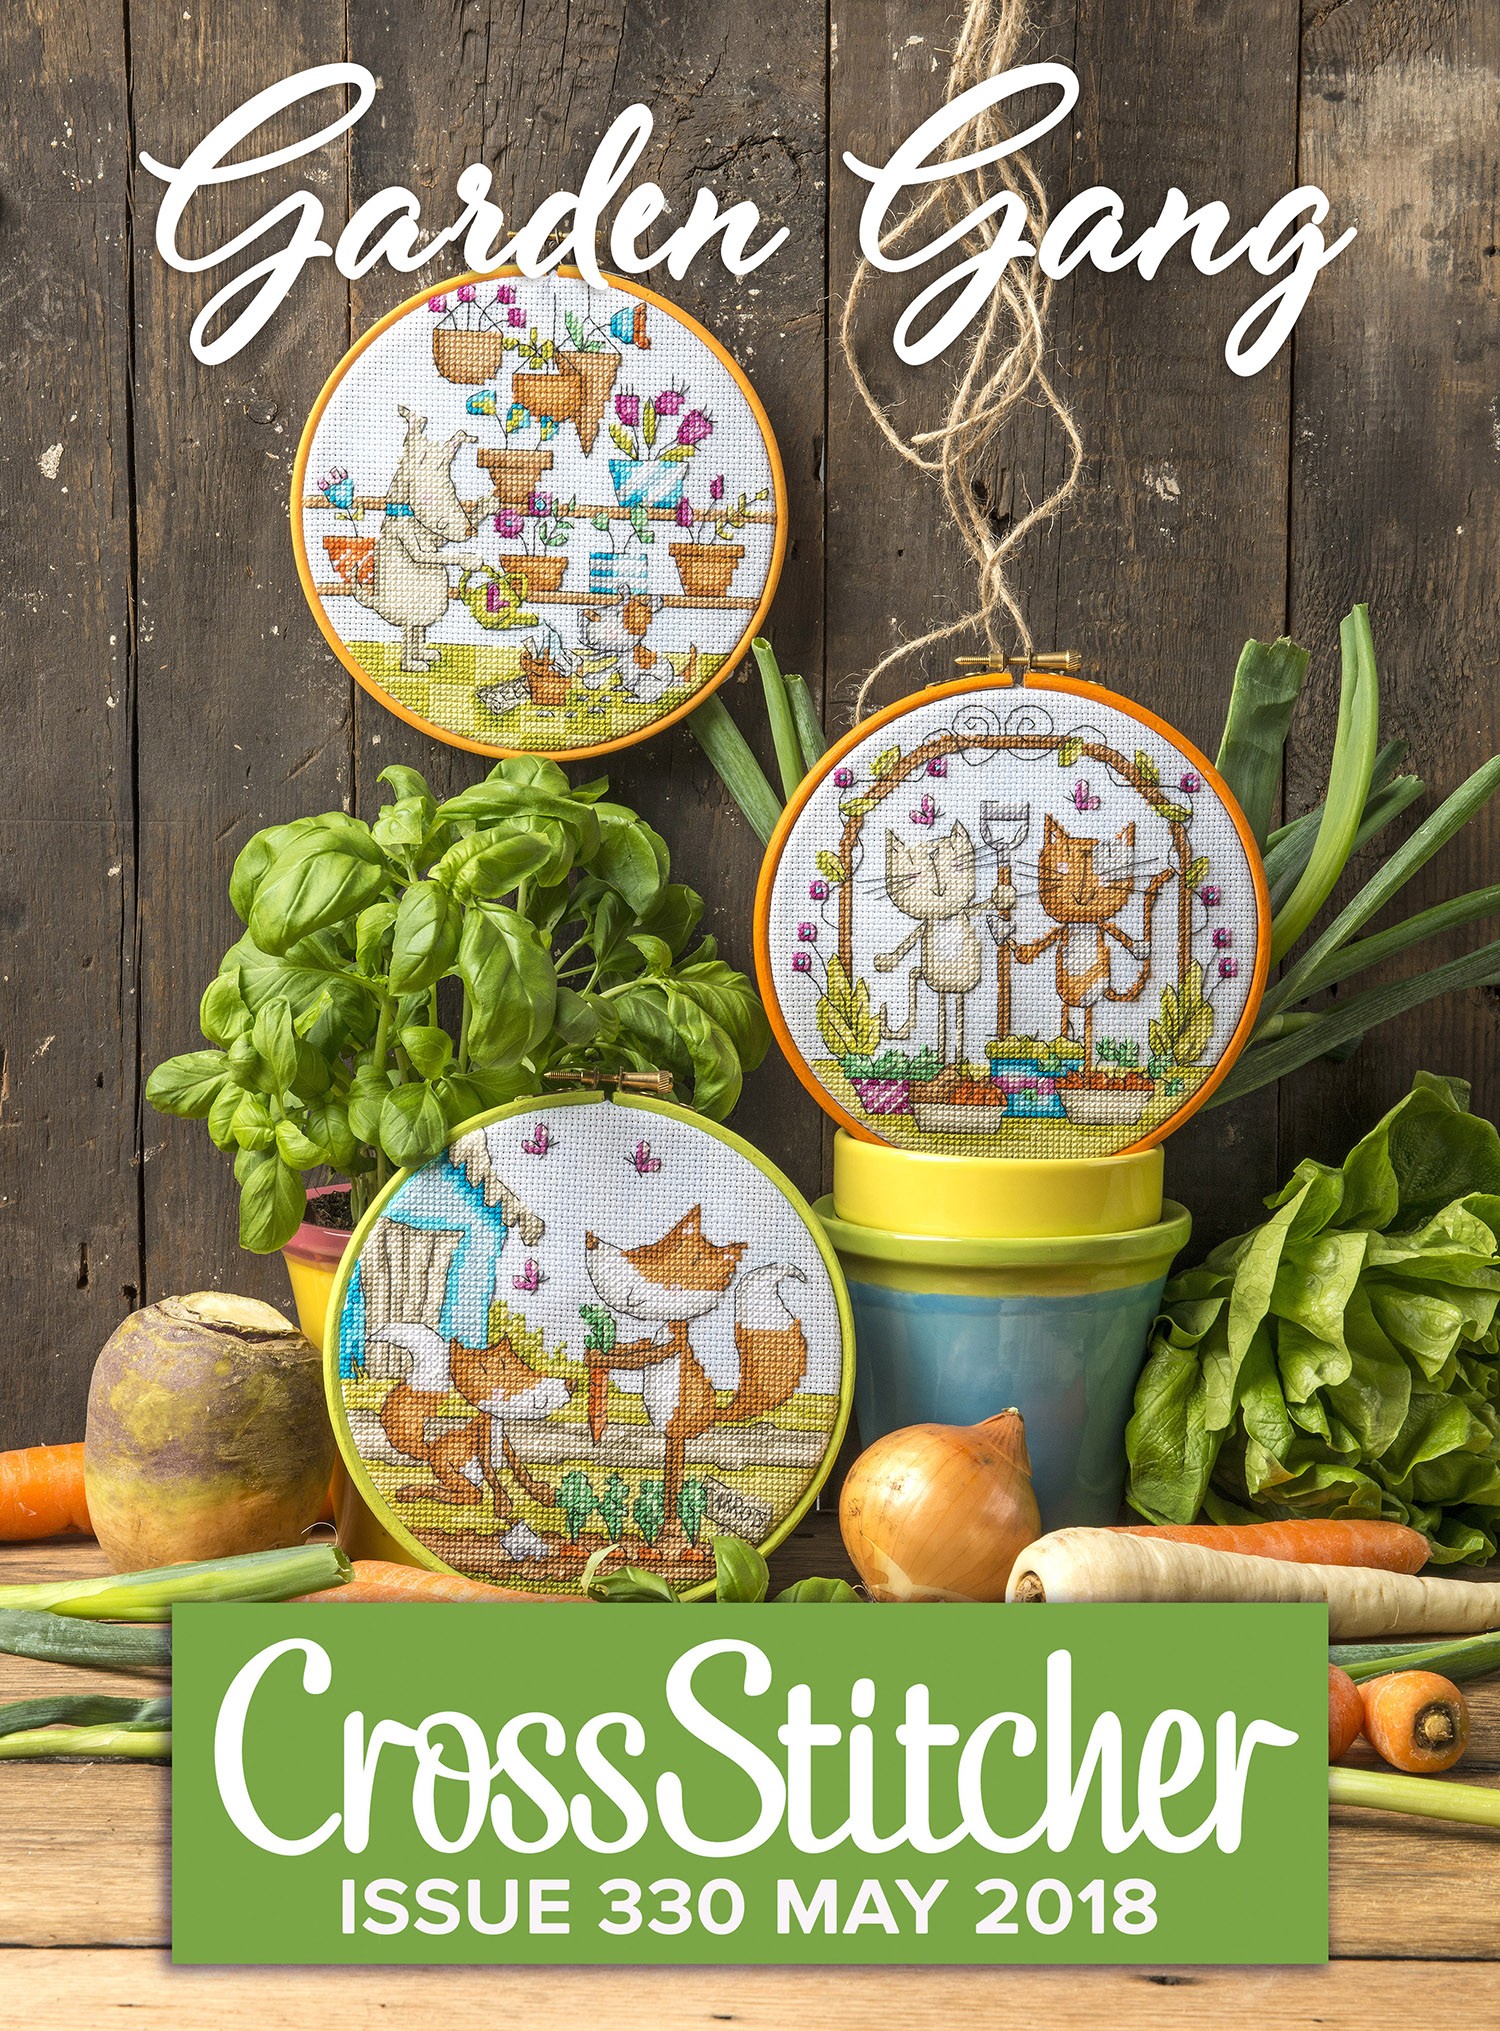 Cross Stitcher Project Pack - Garden Gang Issue 330